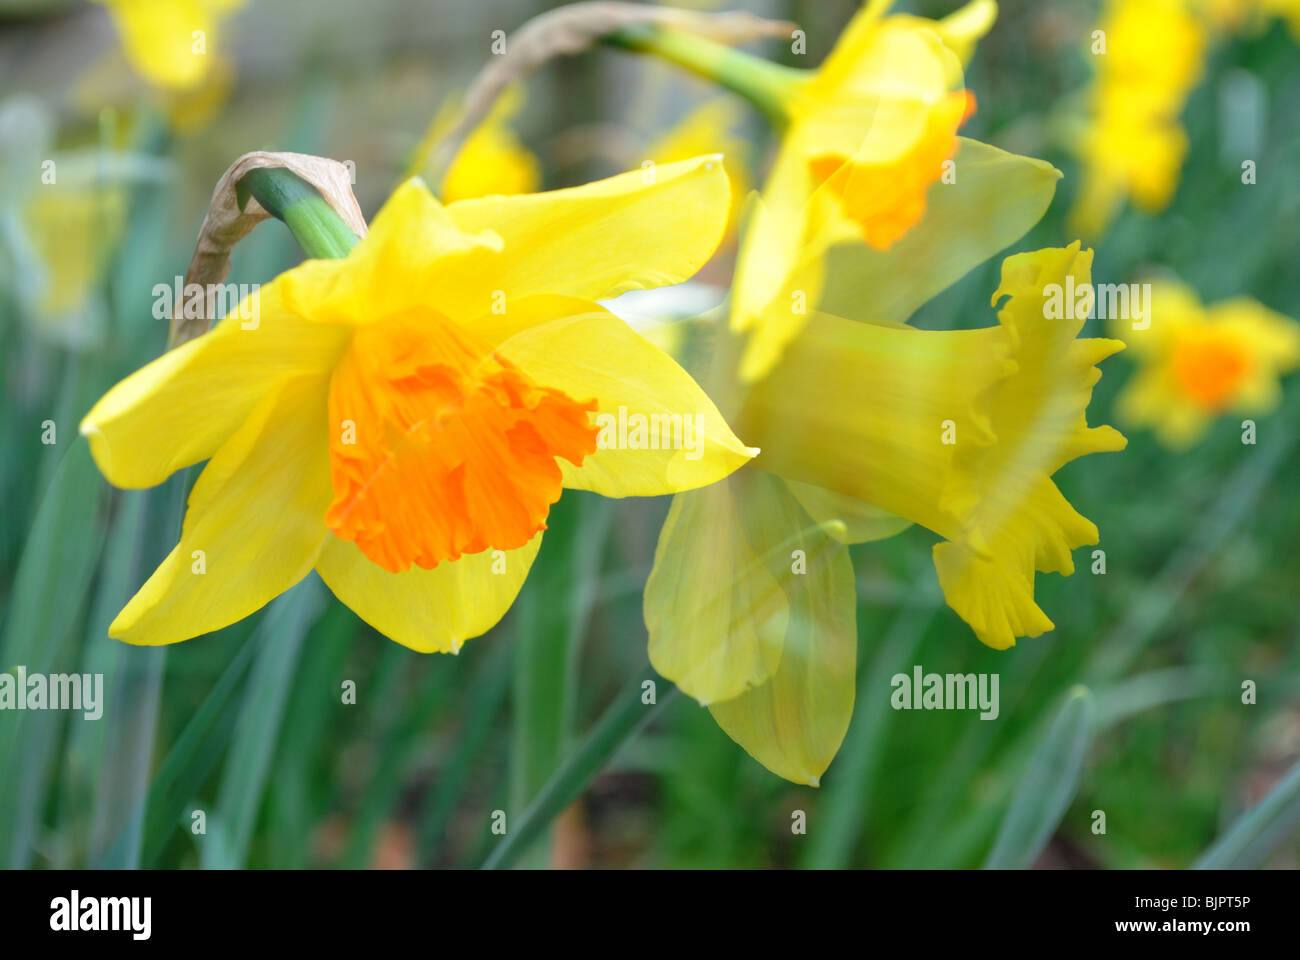 Double exposure of Daffodils Stock Photo